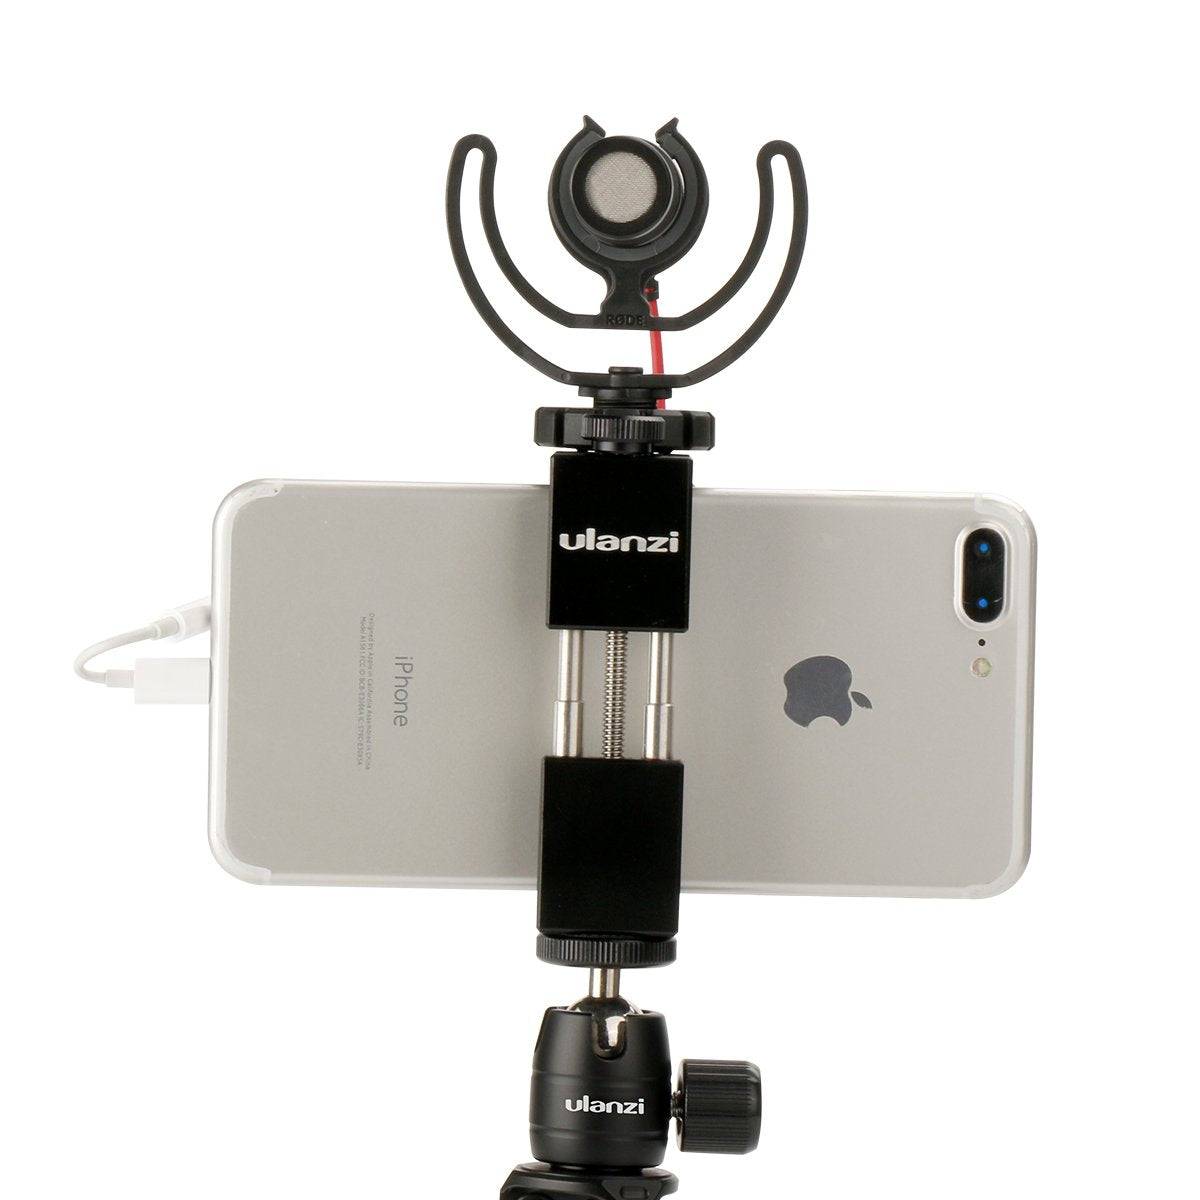 Ulanzi ST-02 Smartphone Video Rig Tripod Mount Adapter with Hot Shoe Mount